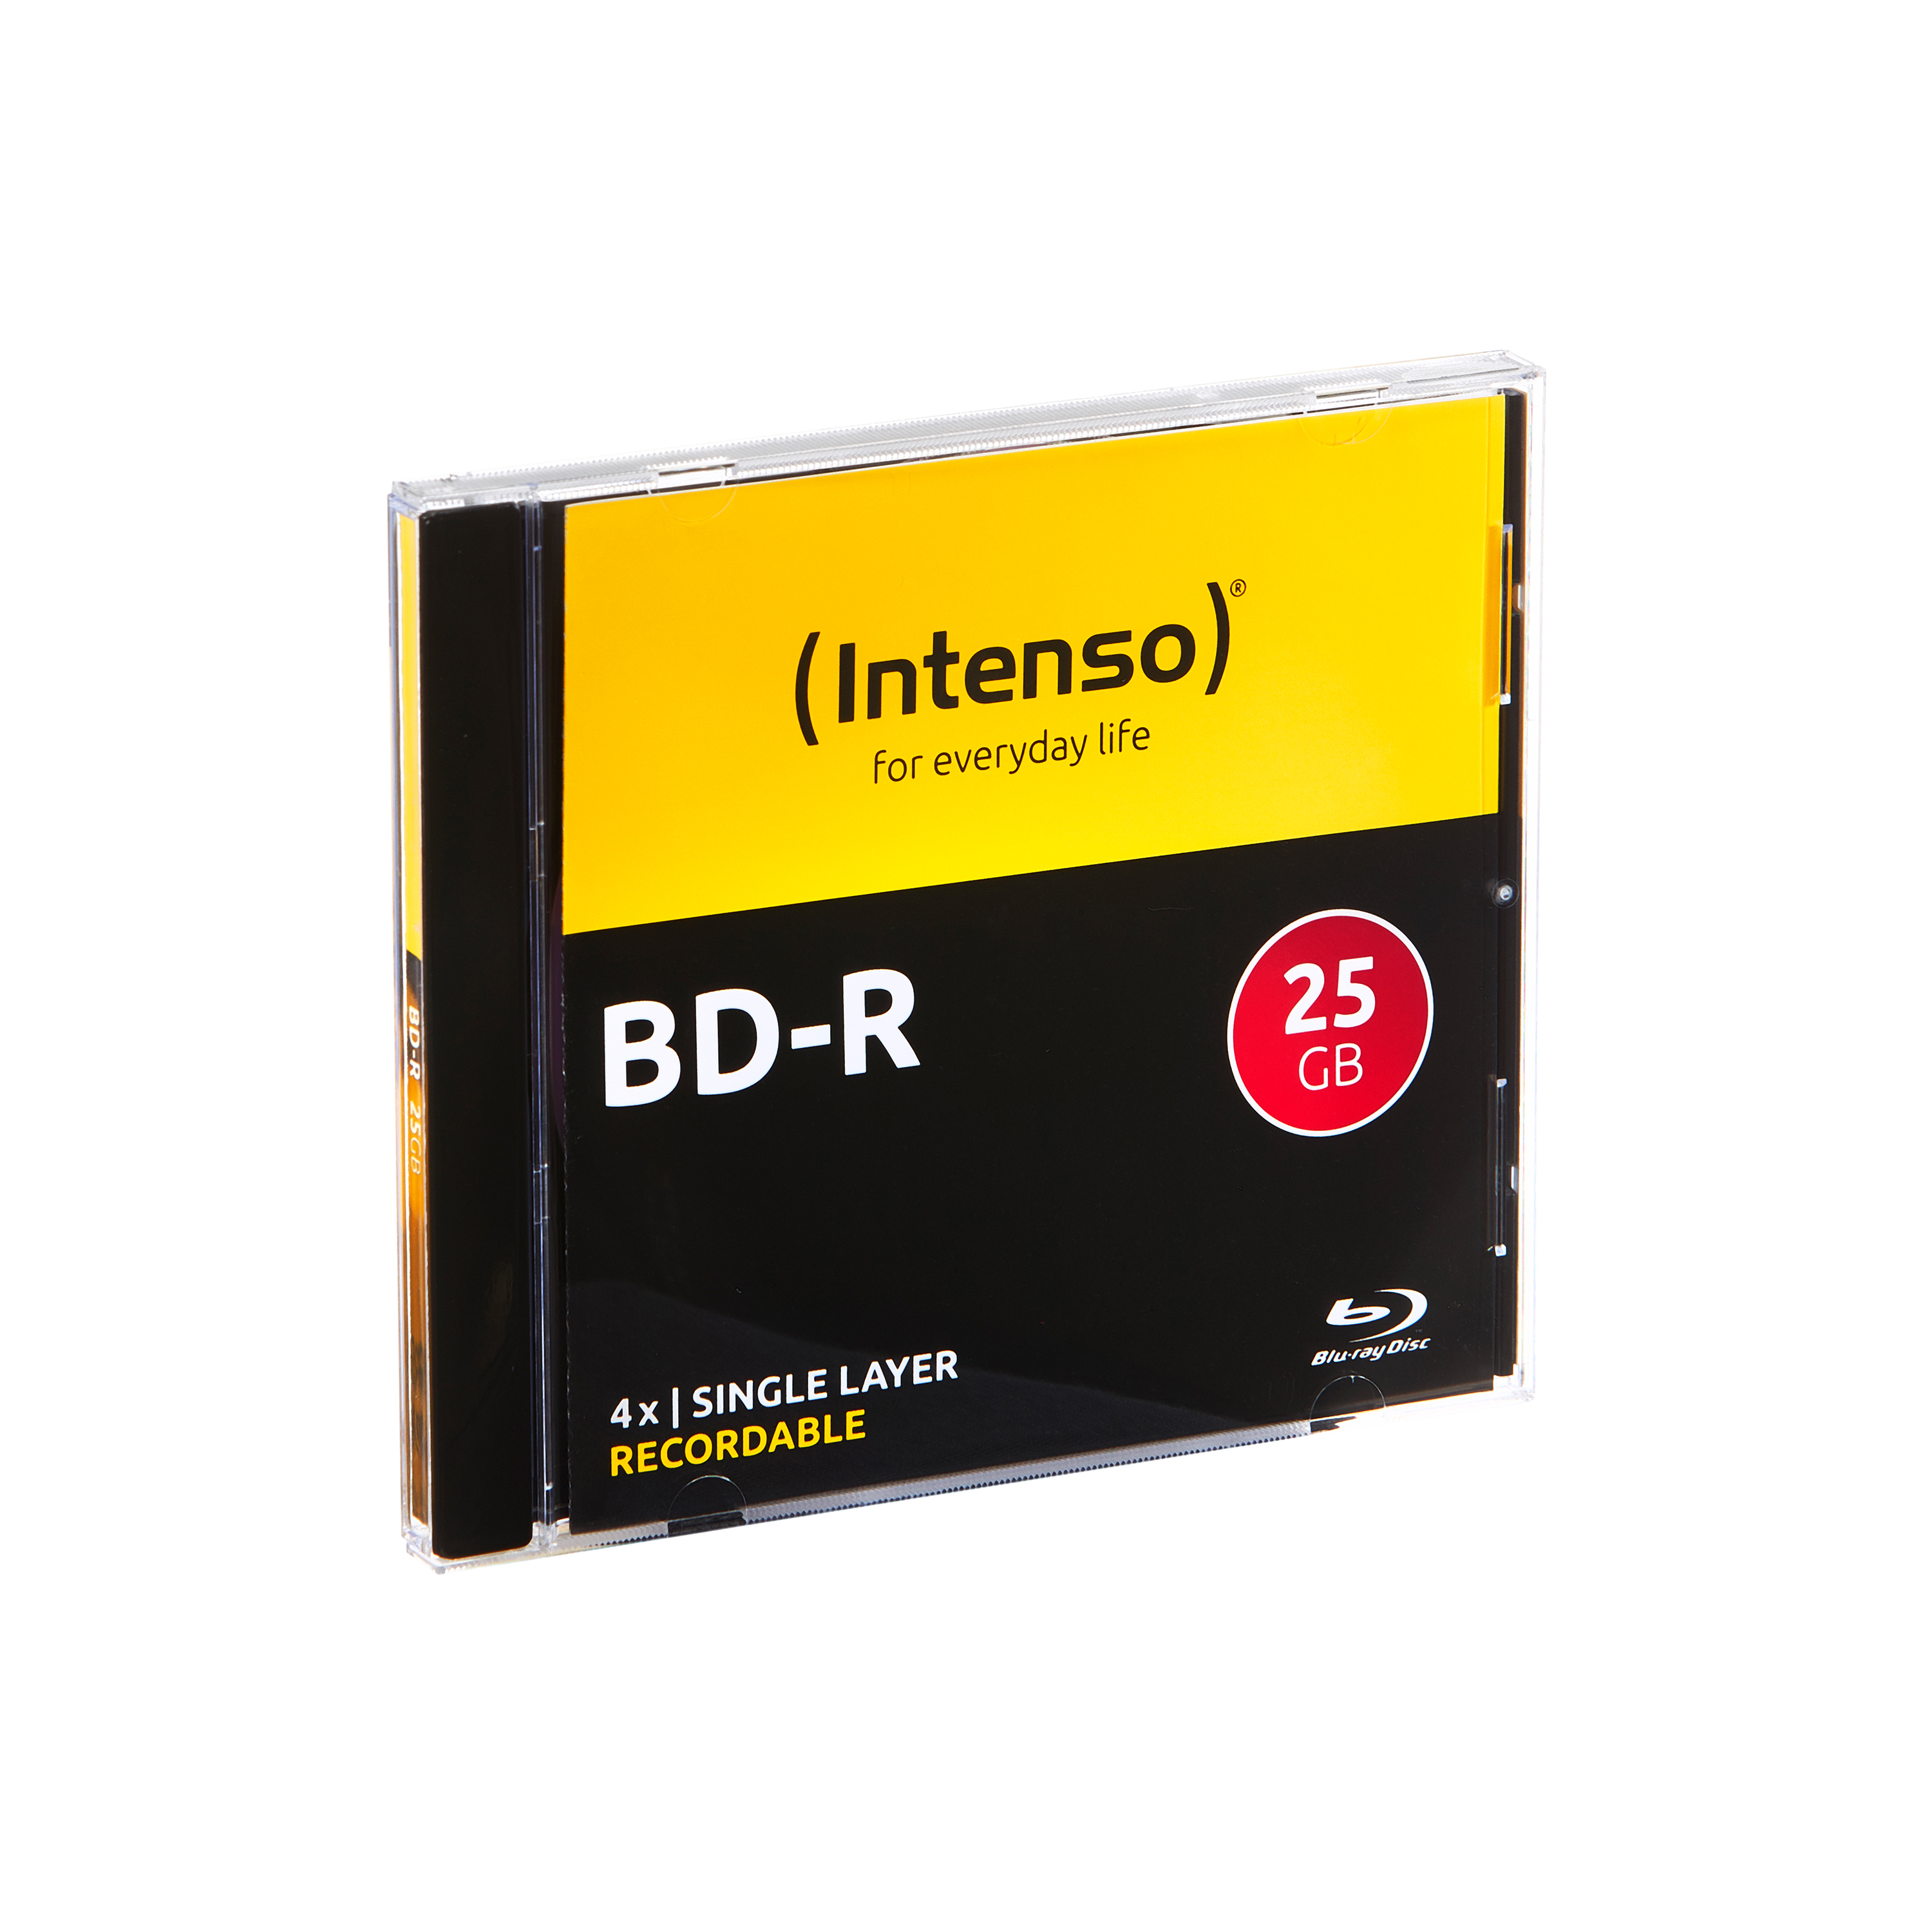 BD-R Blu-Ray 5 Case Jewel Rohlinge, INTENSO BD-R